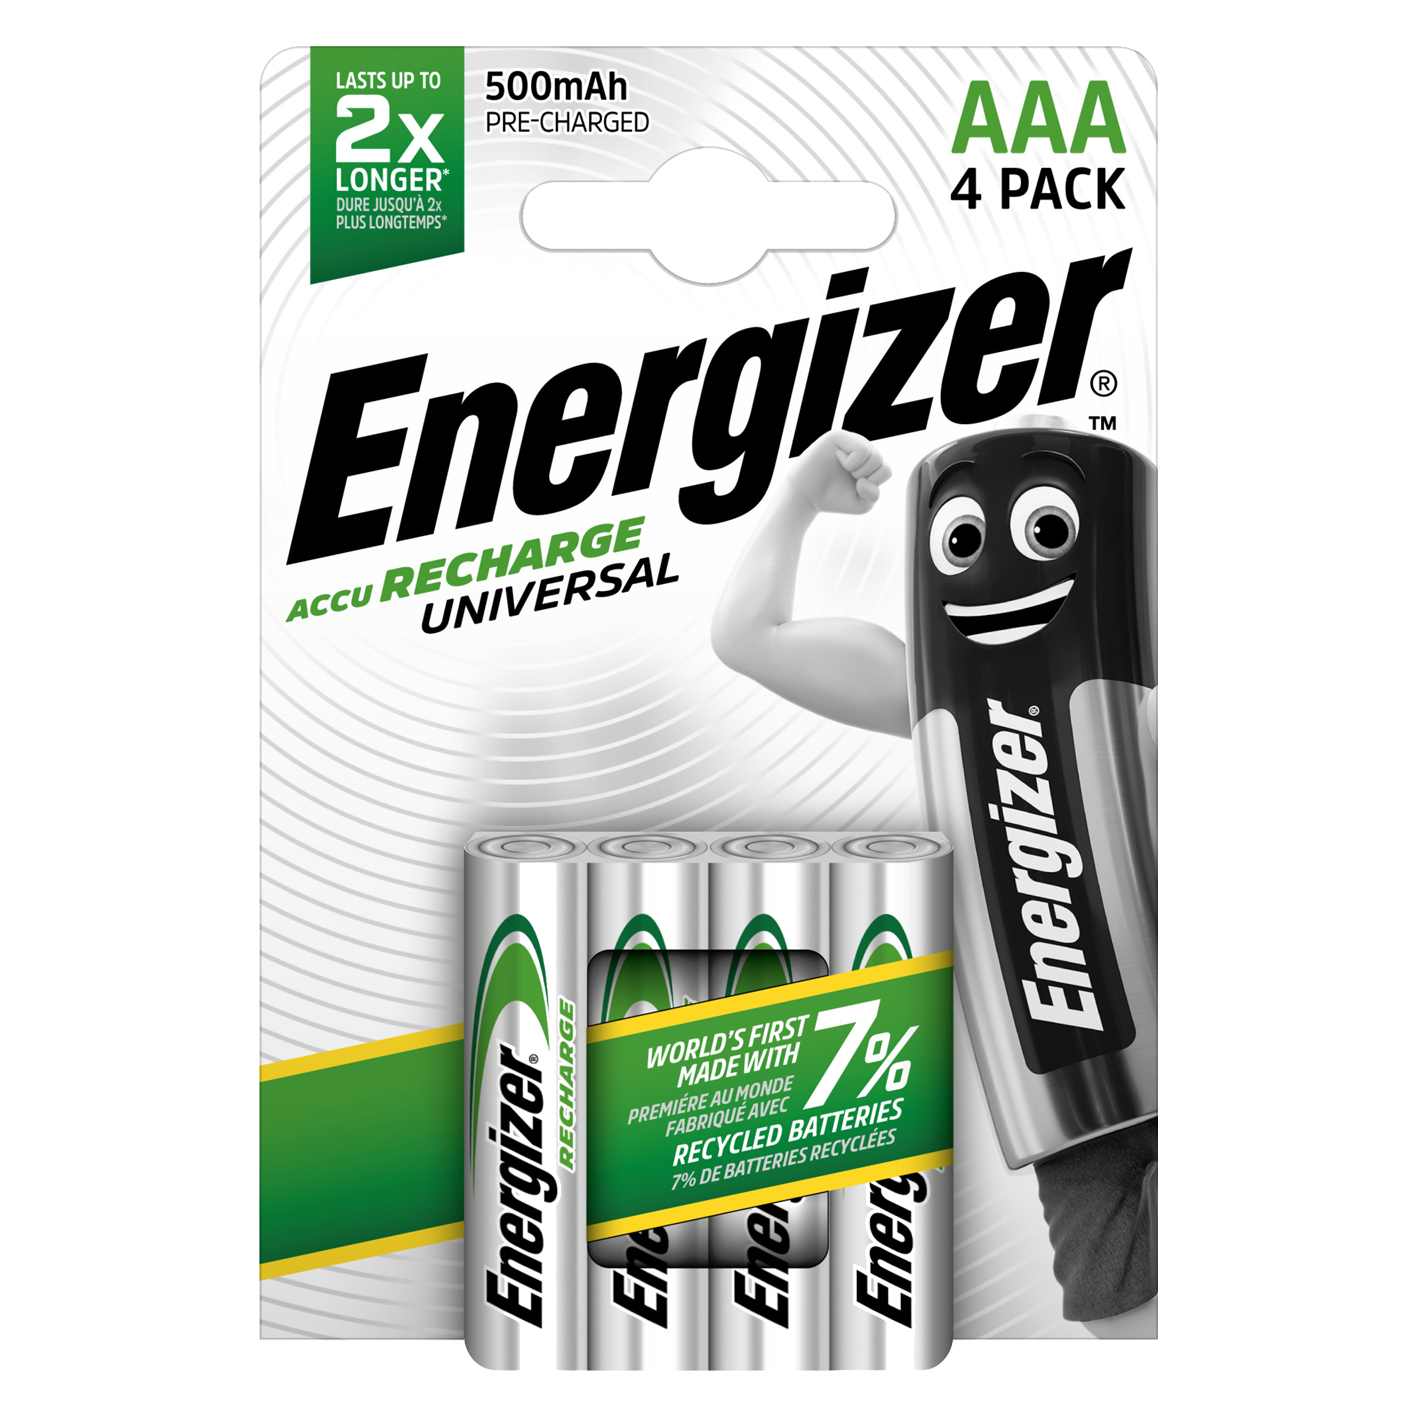 Energizer AAA 500mAh Recarga Universal, Paquete de 4